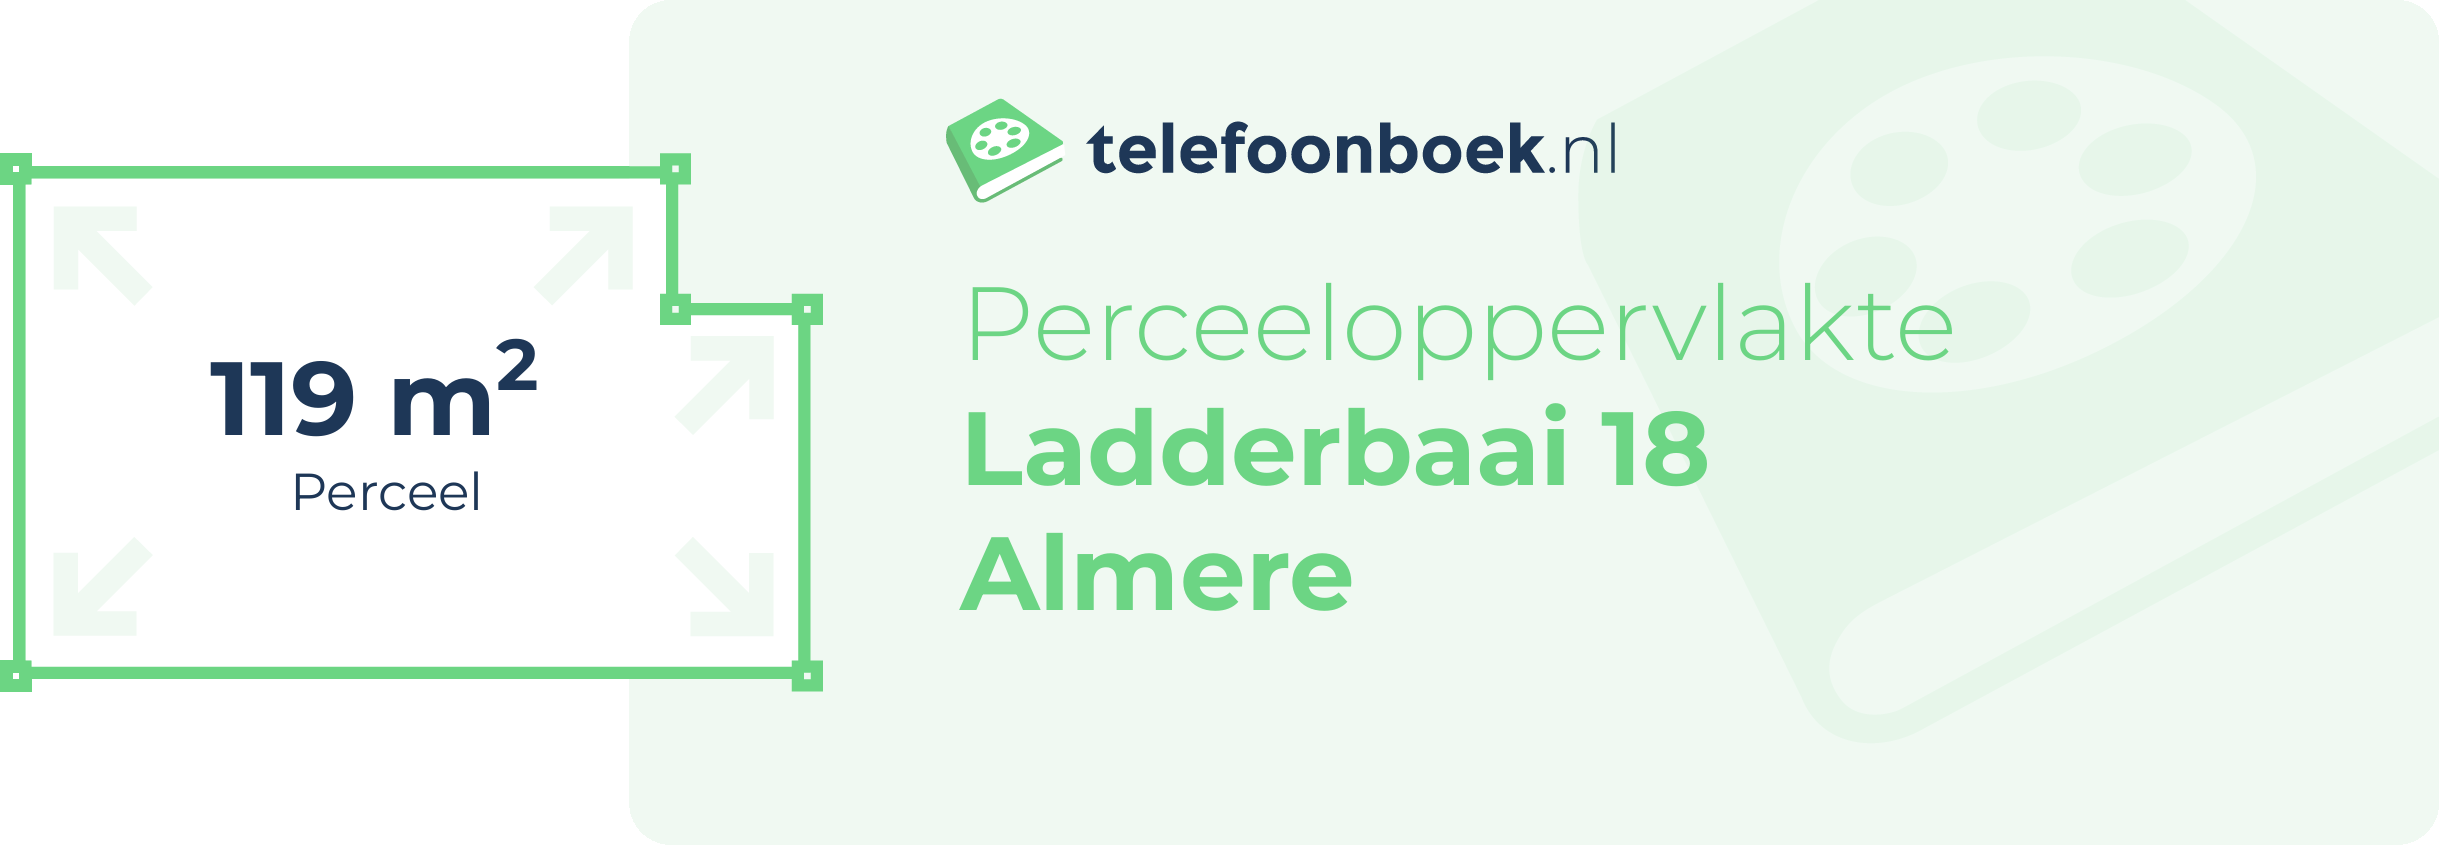 Perceeloppervlakte Ladderbaai 18 Almere